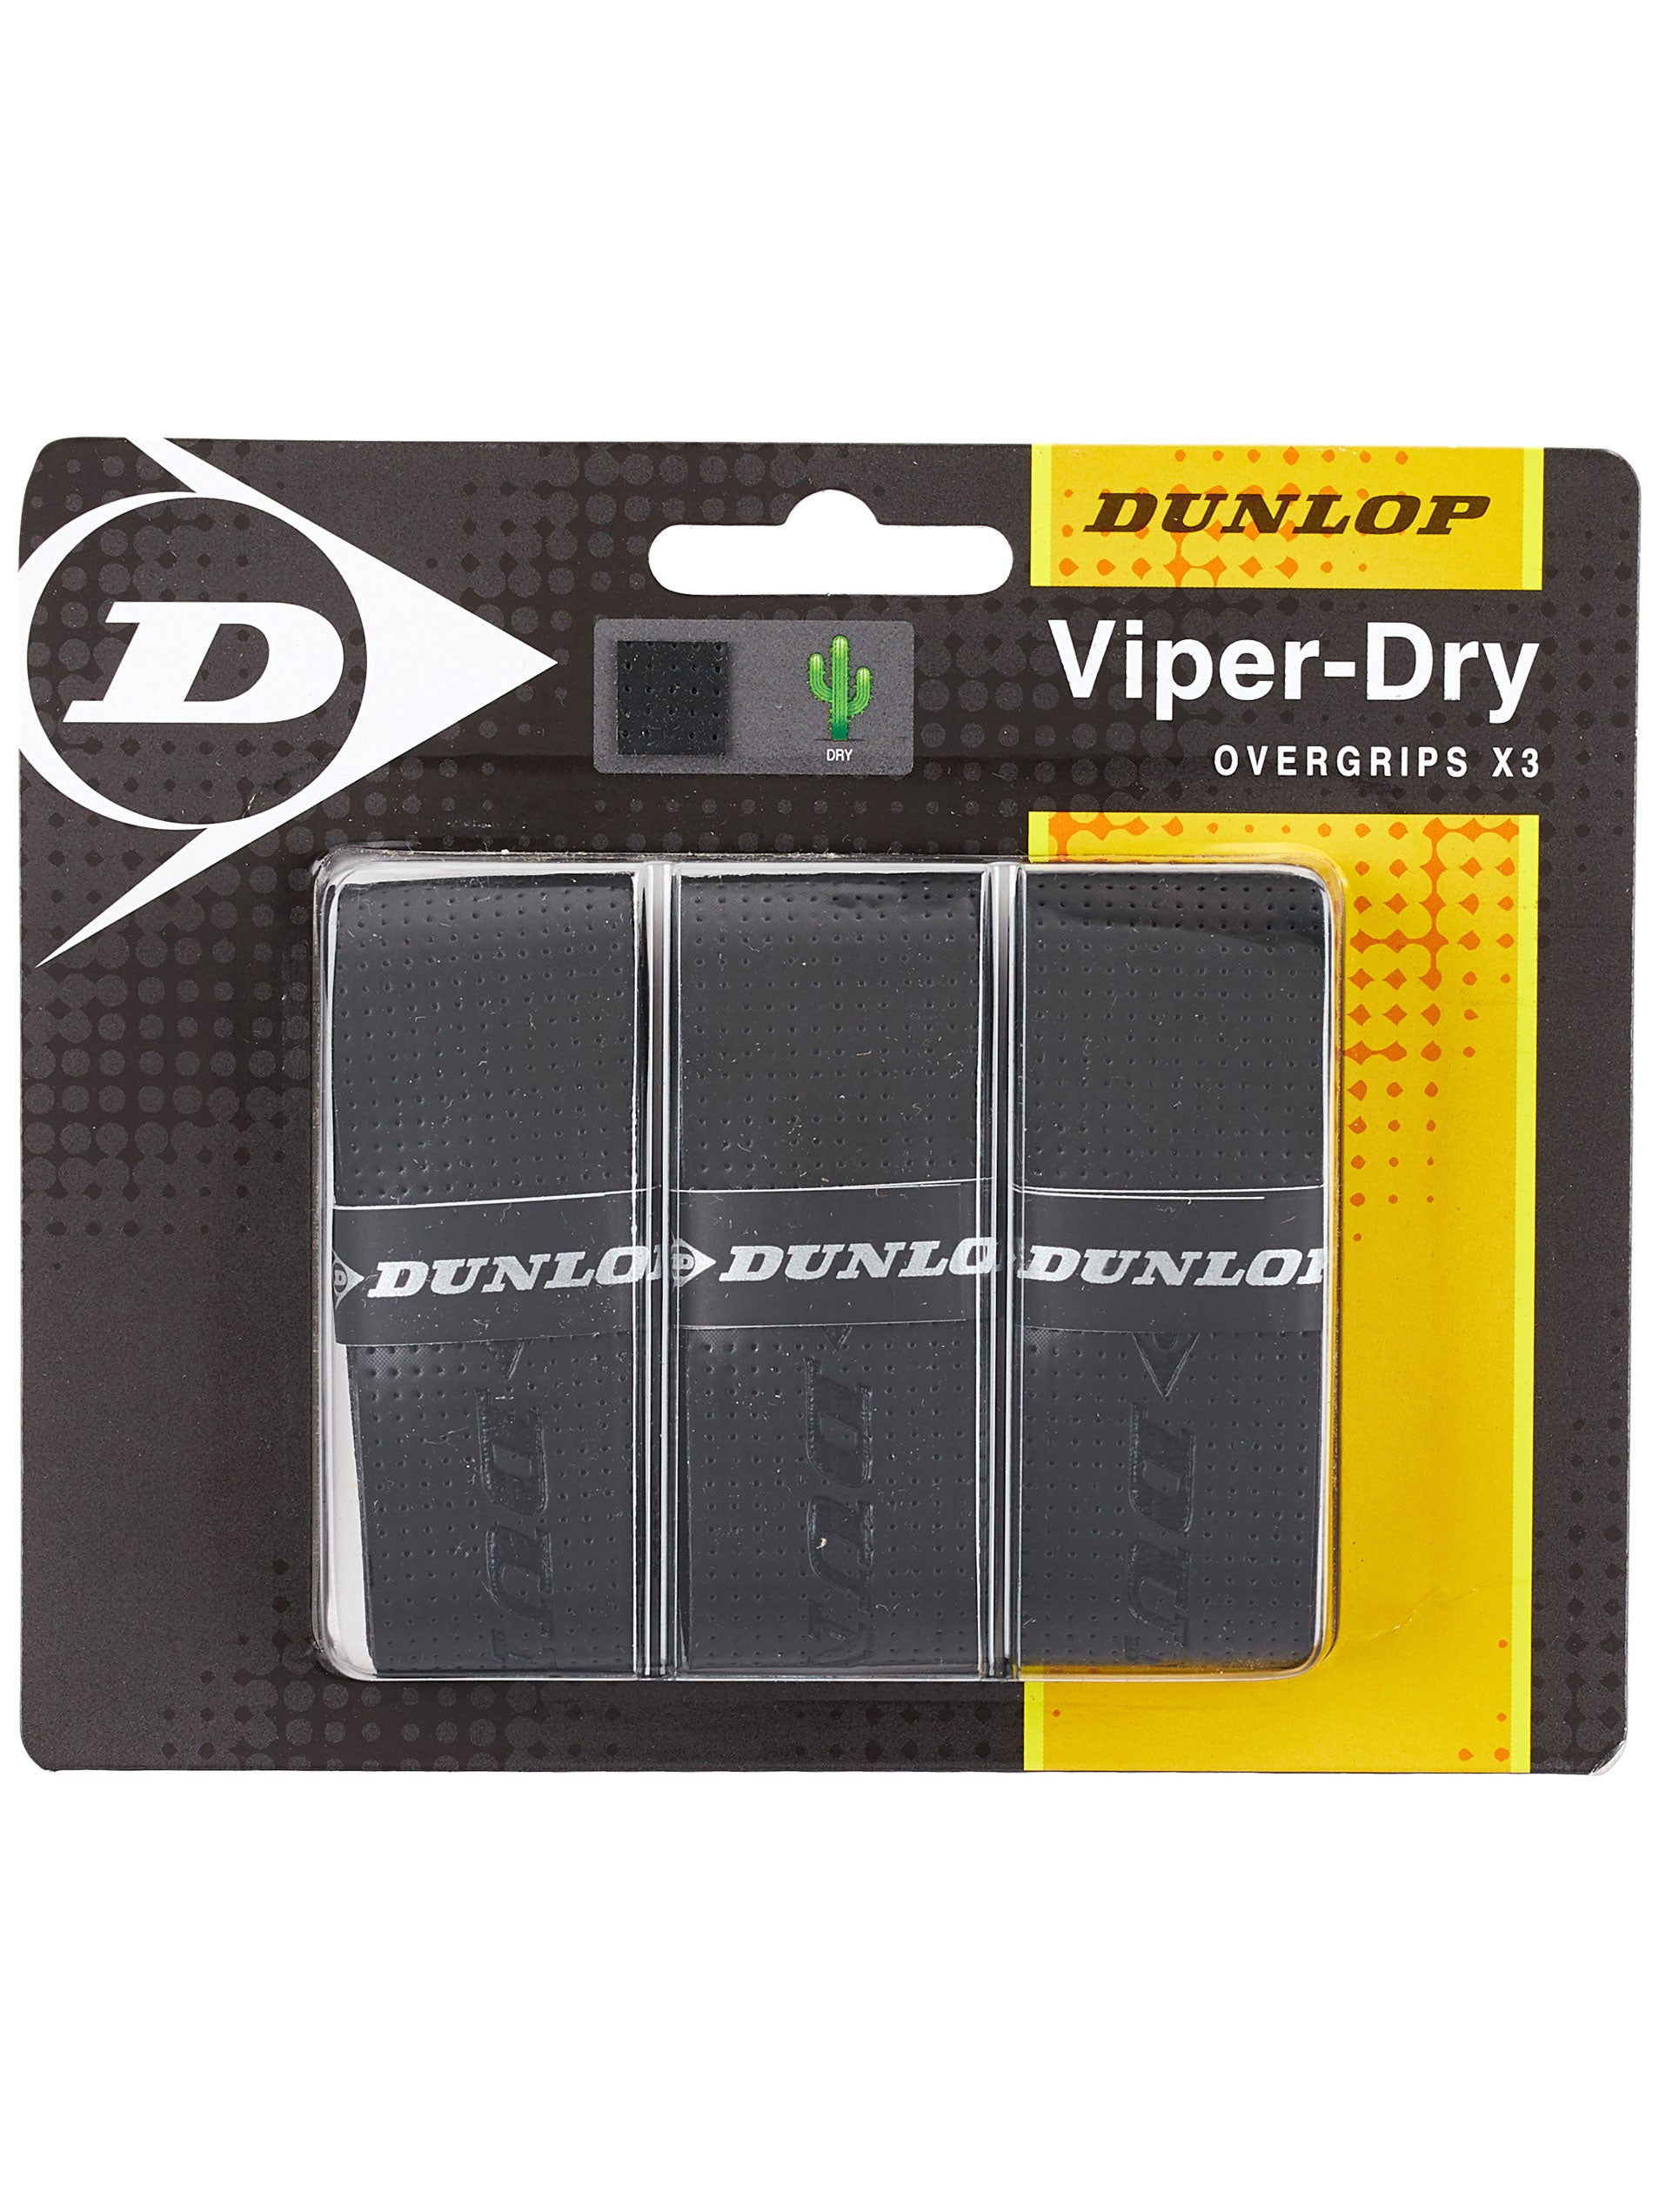 Black Dunlop Viperdry Black 3 Pack Ultra Dry Tennis Overgrip 